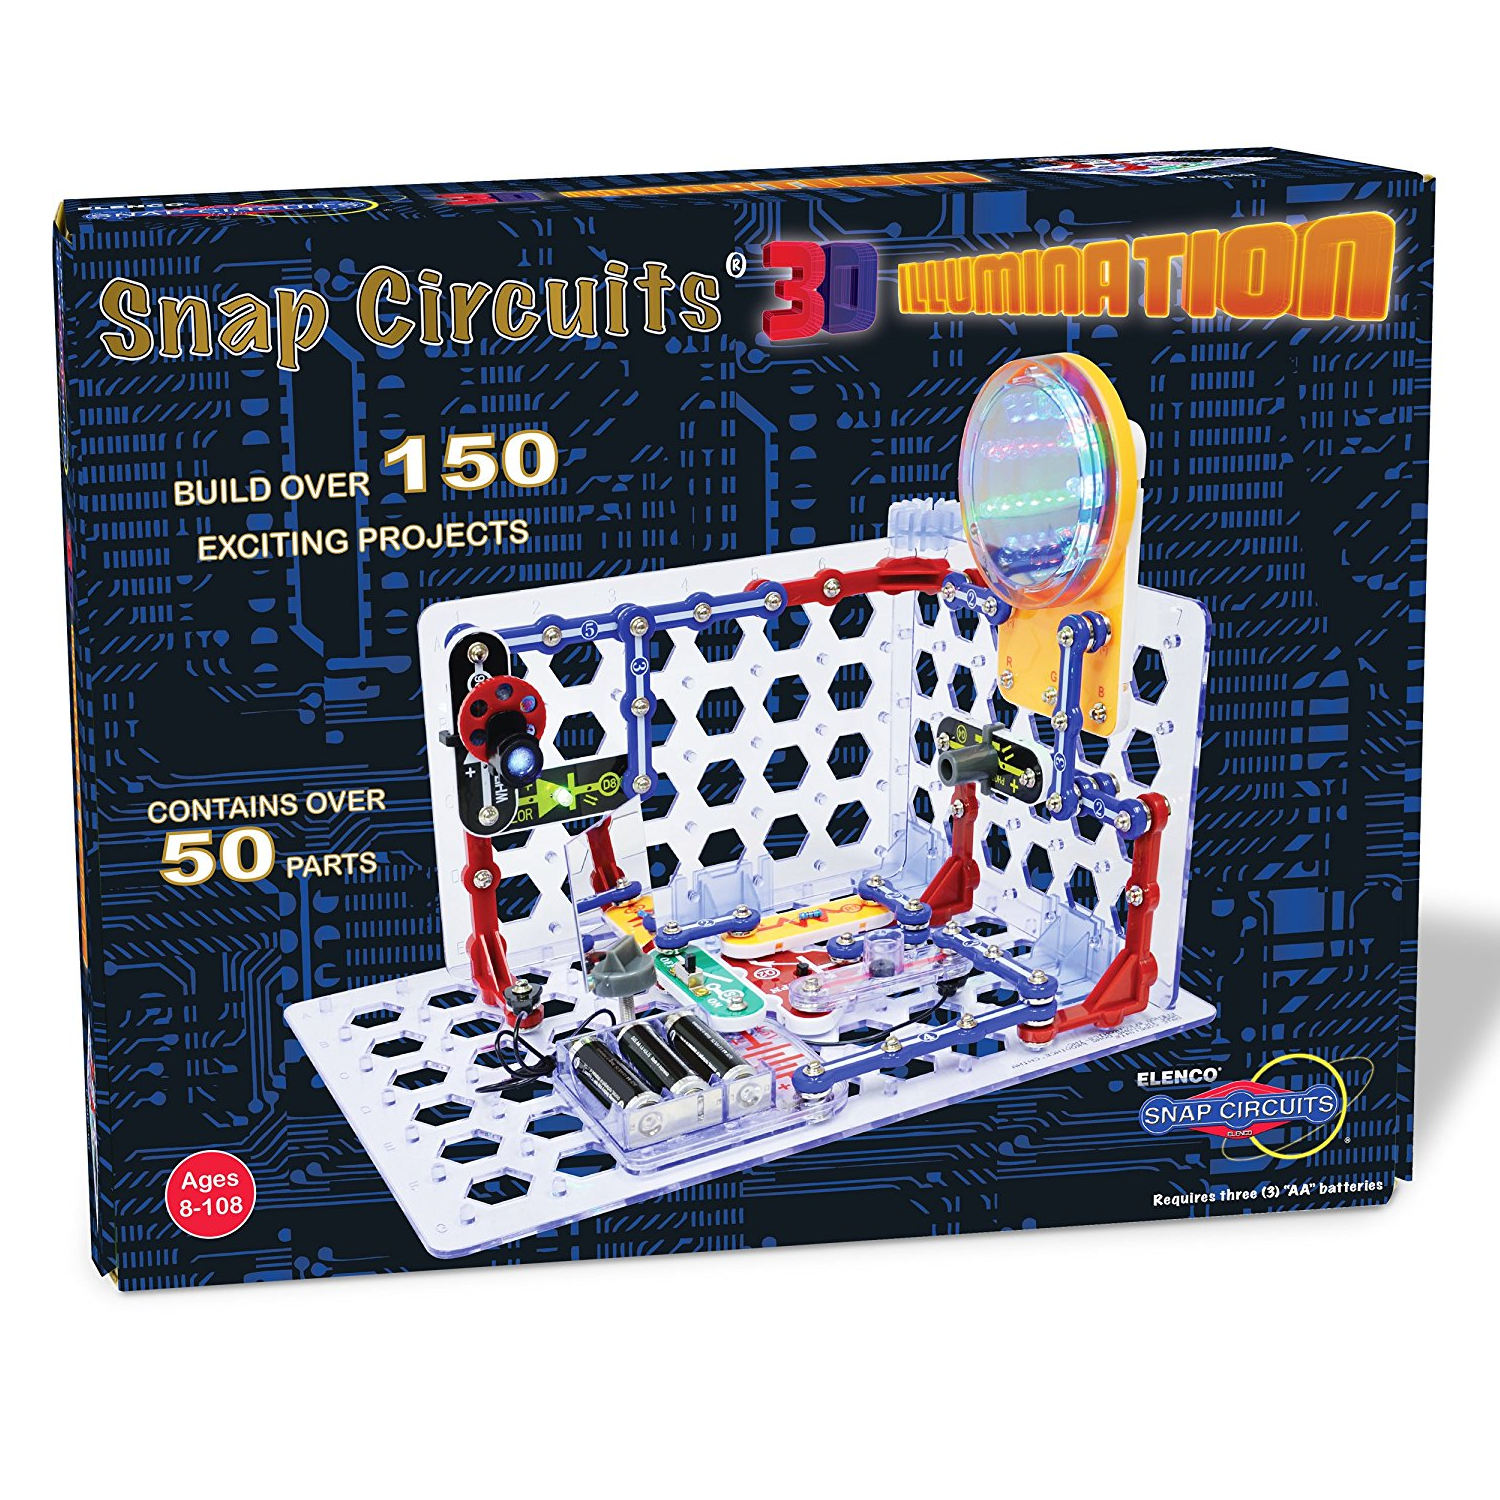 Snap Circuits 3D Illumination Electronics Discovery Kit Just $38.99!